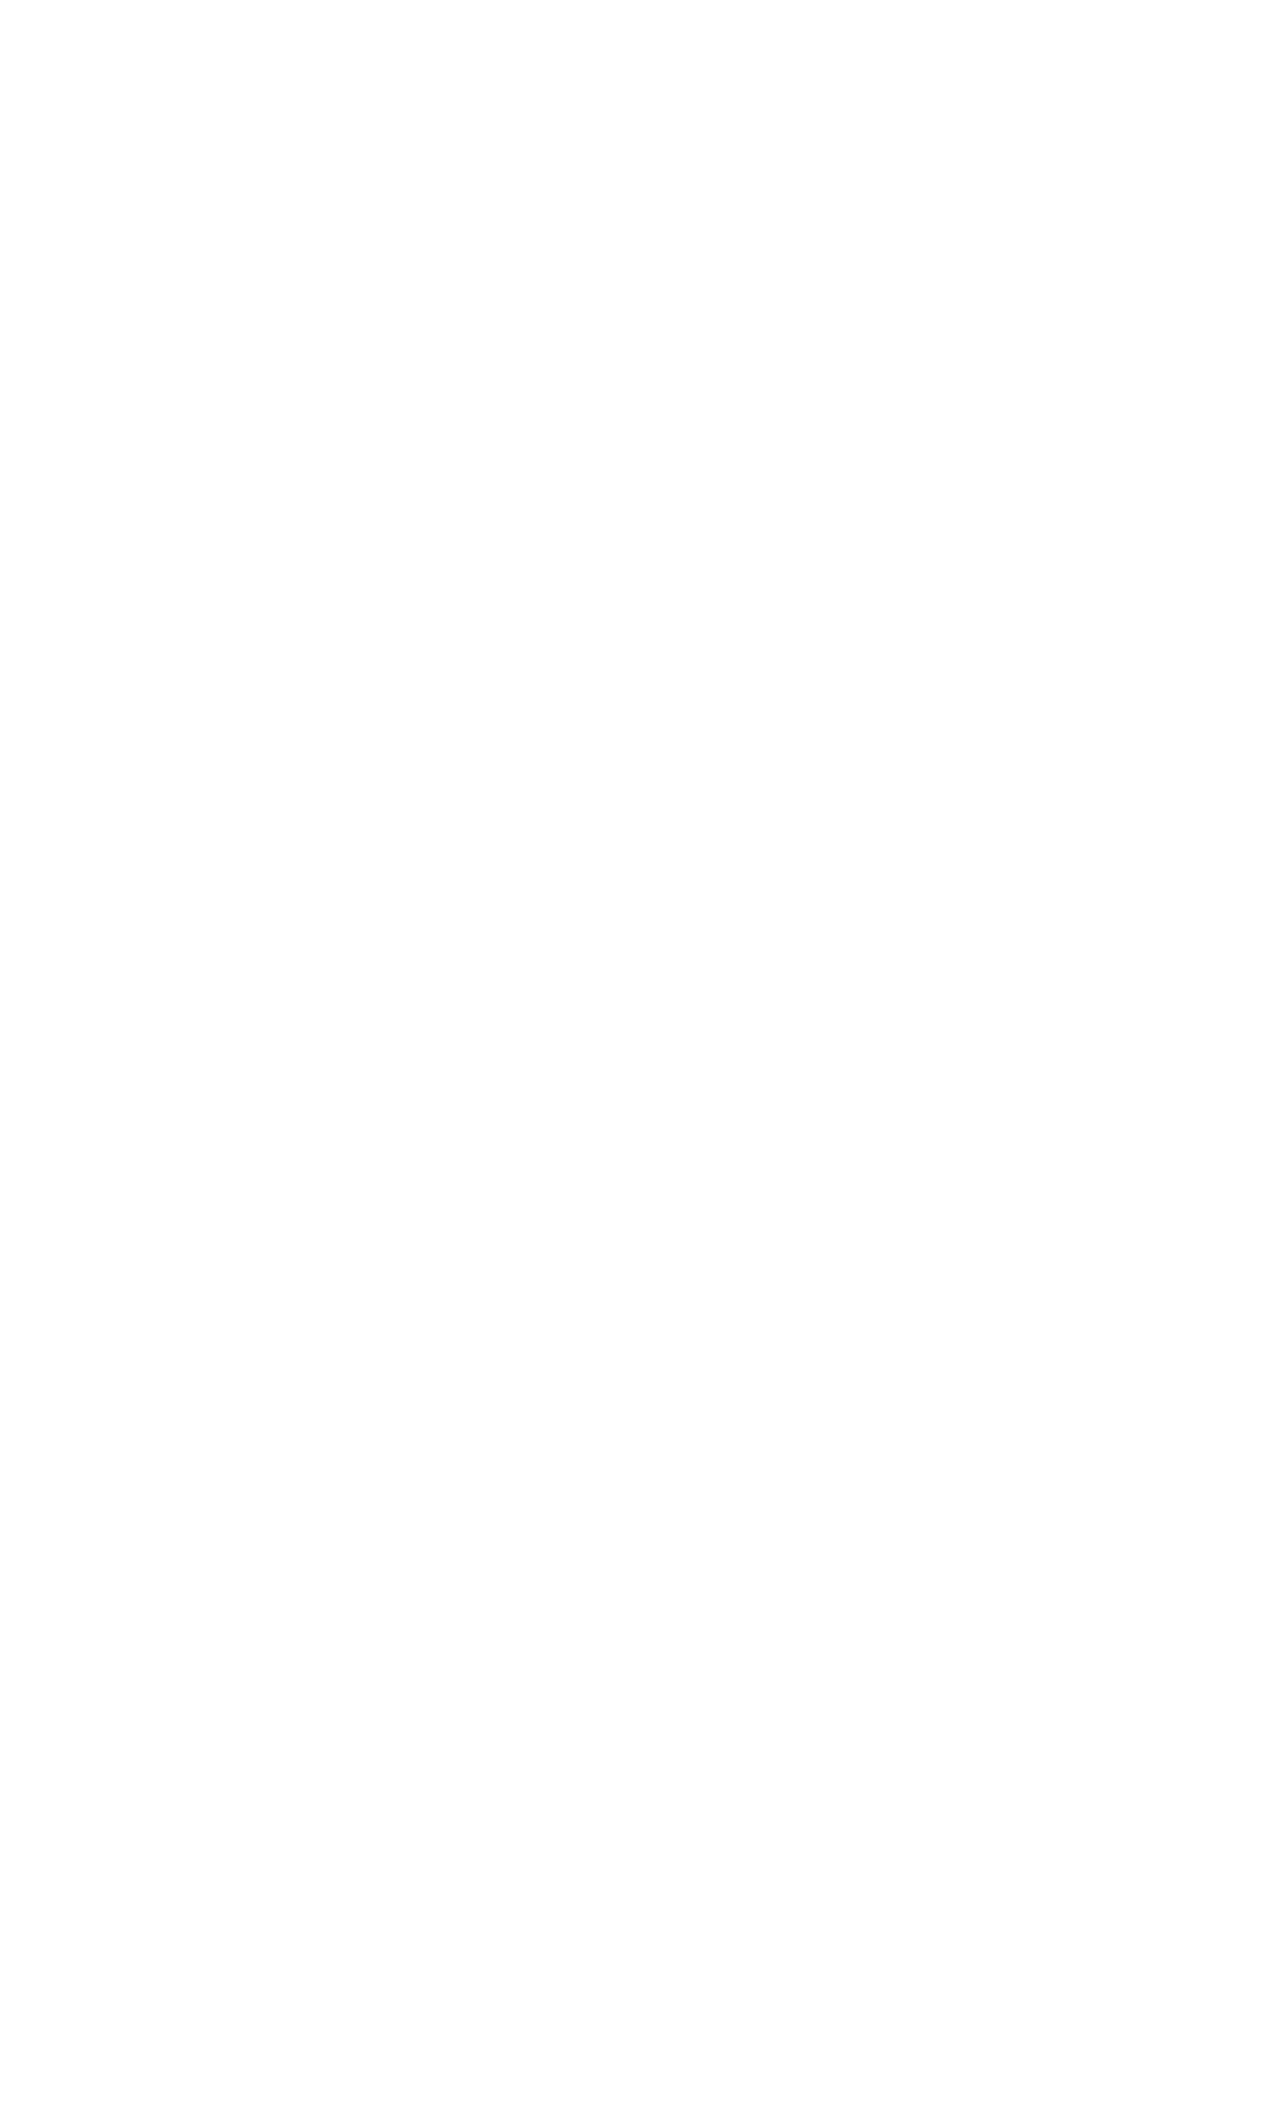 Brewers Association Independent Seal